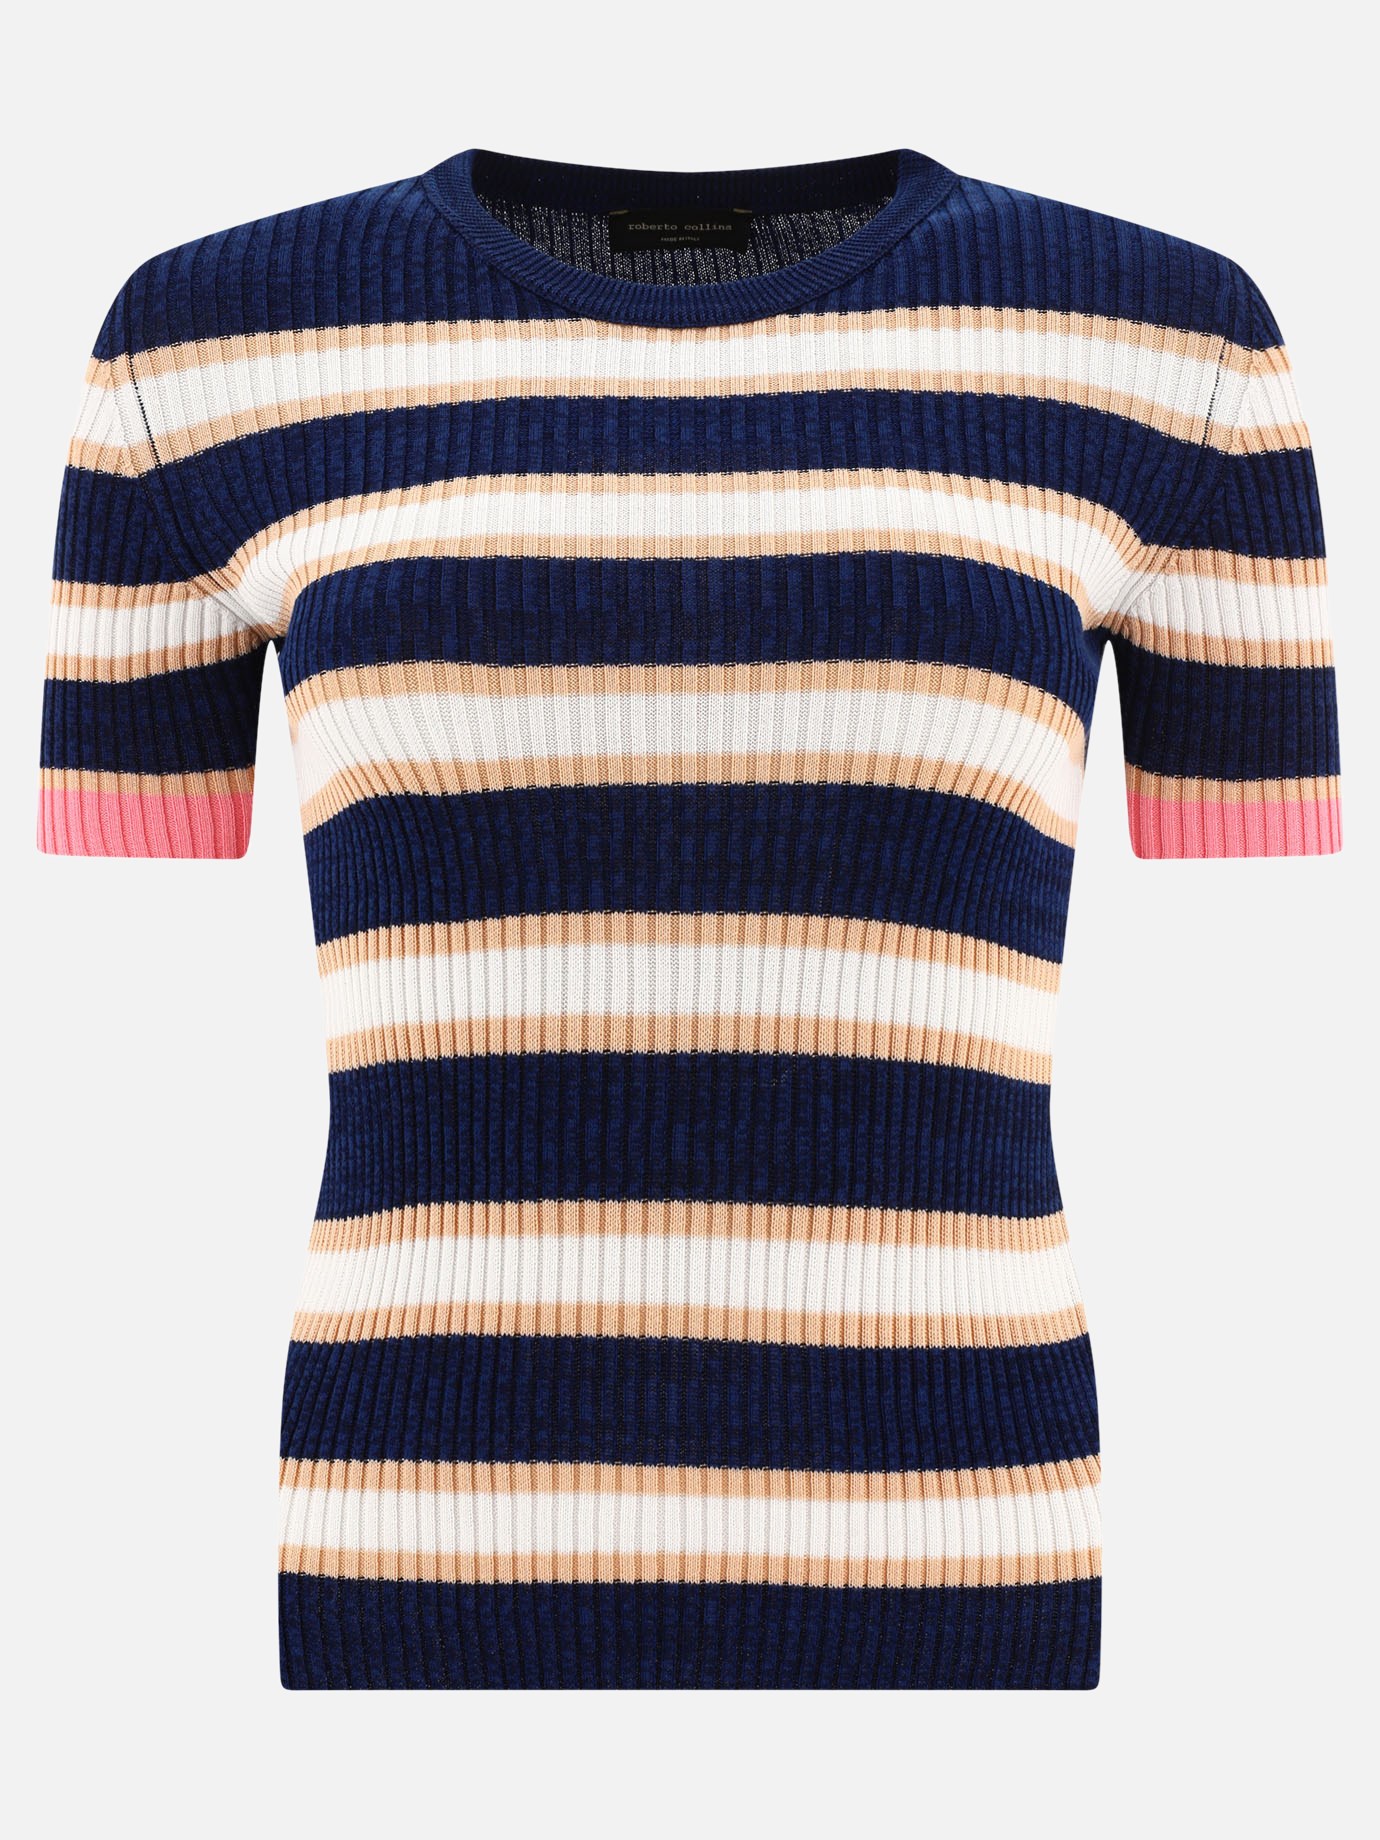 Striped sweater